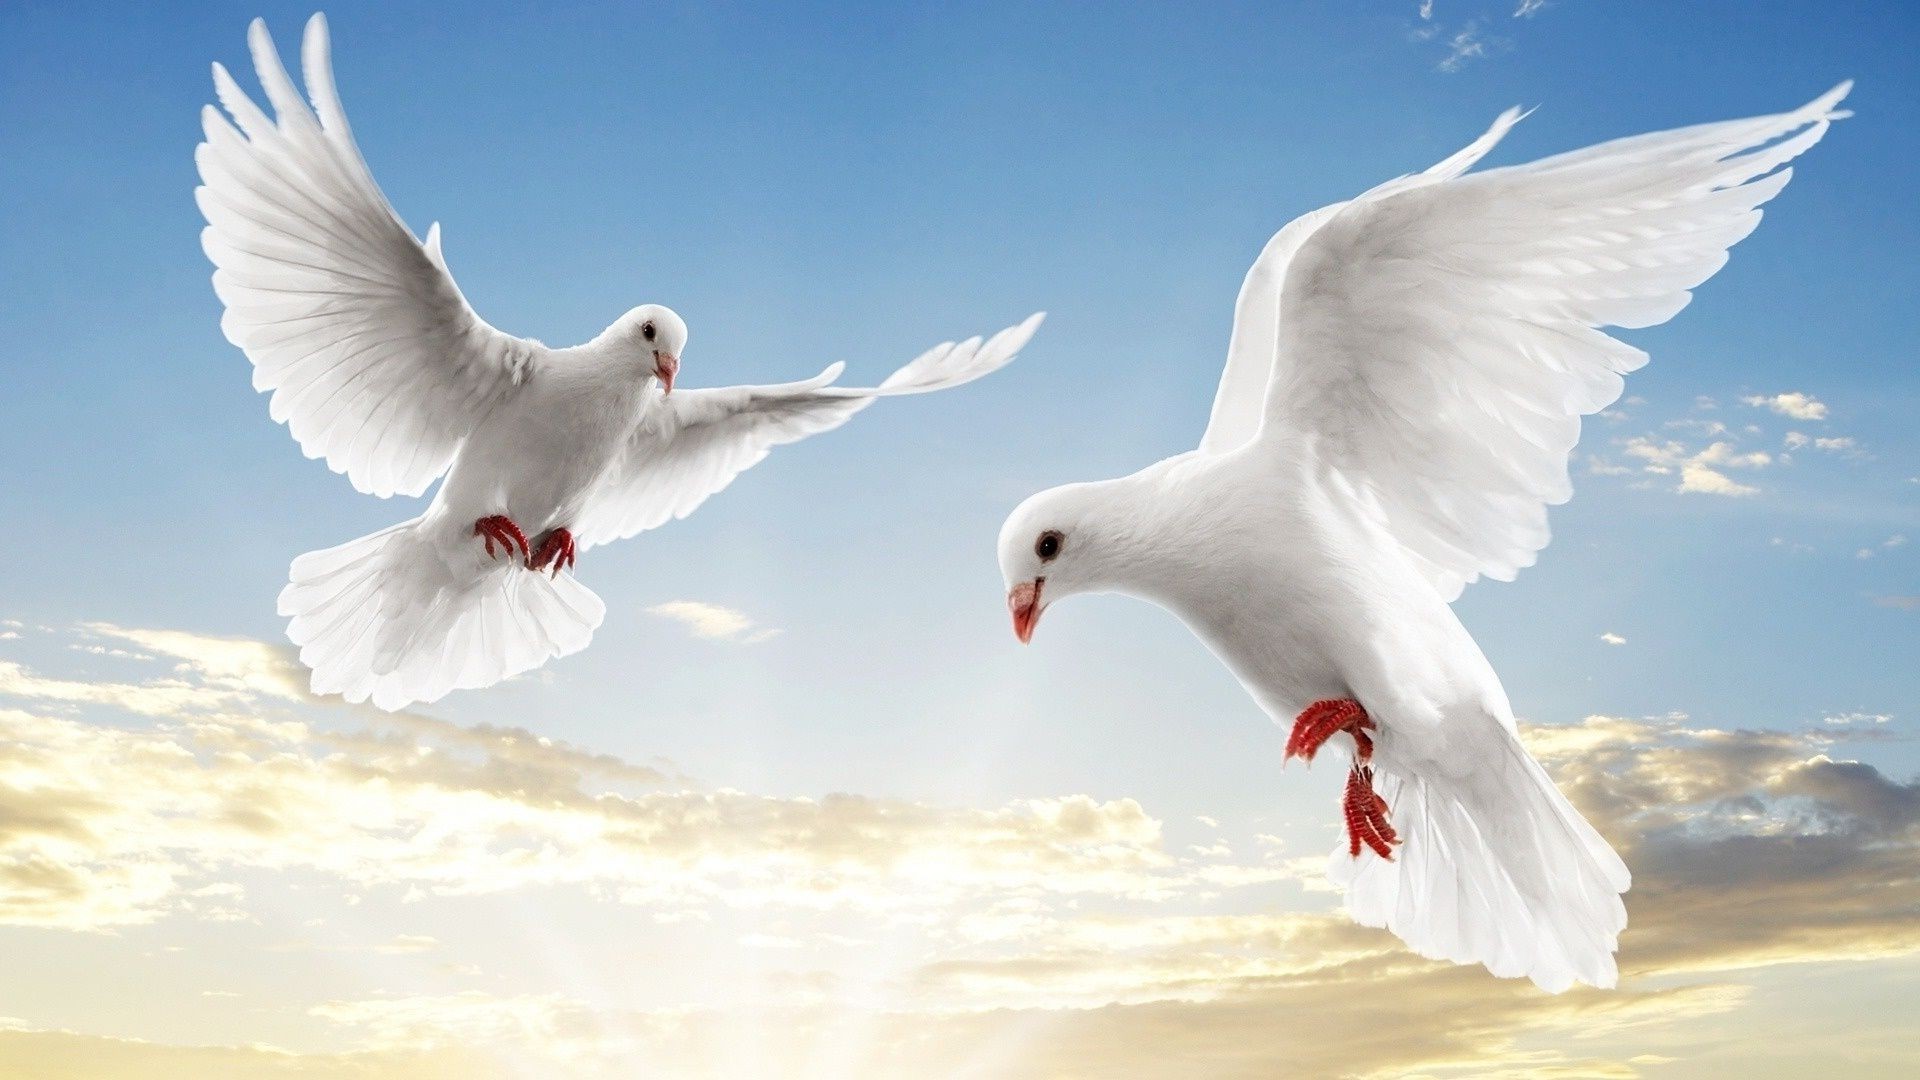 animals bird seagulls nature flight pigeon freedom wildlife wing animal fly sky outdoors feather